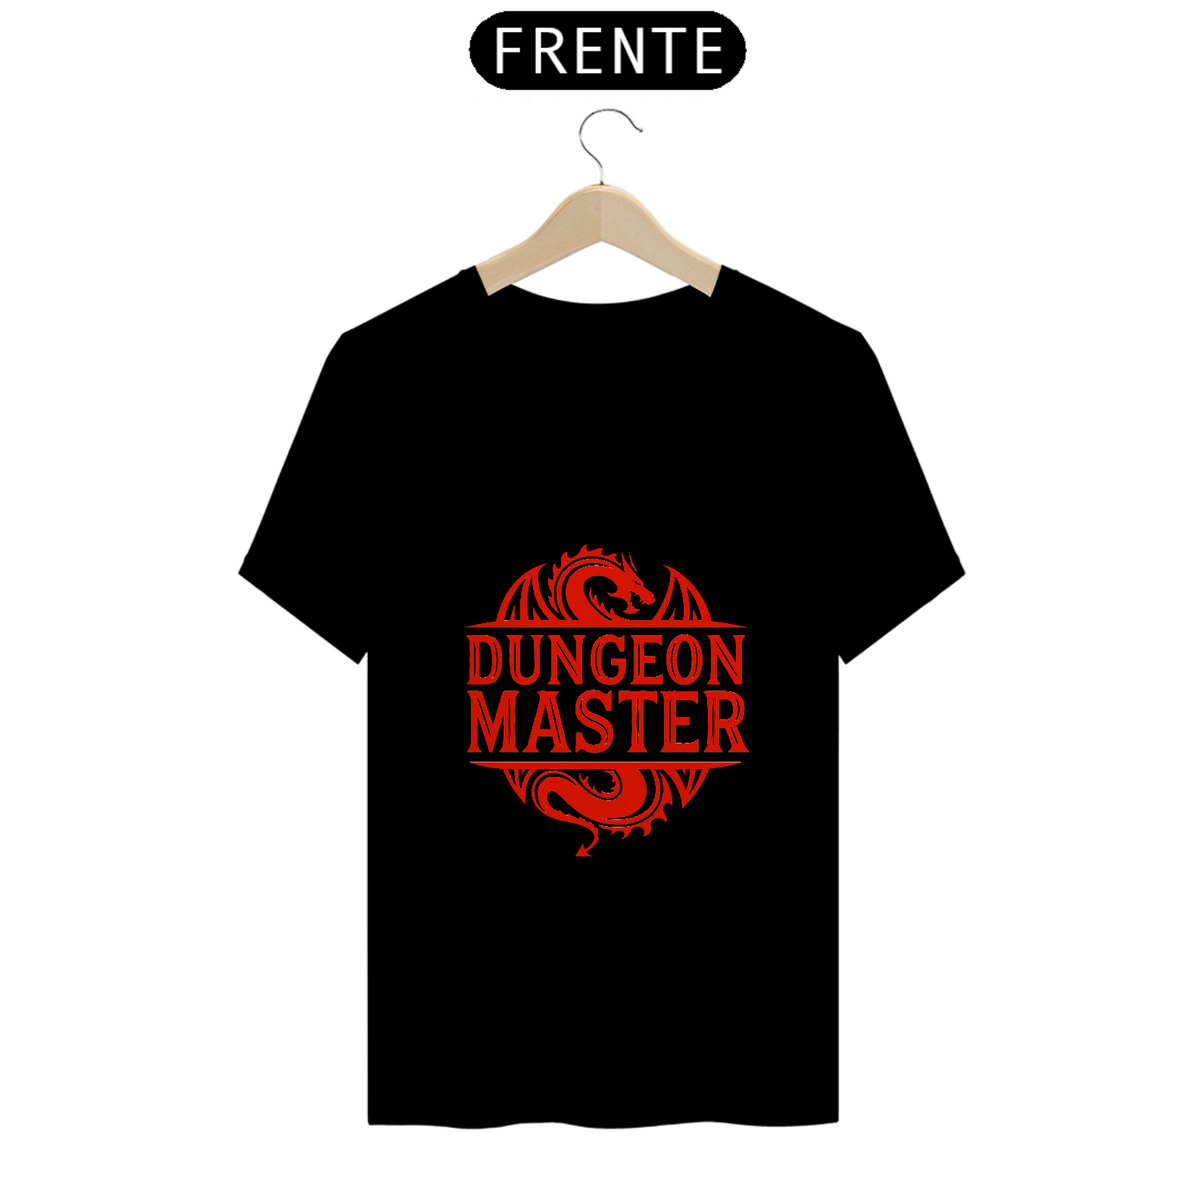 Nome do produto: Camiseta Dungeon Master (D&D)